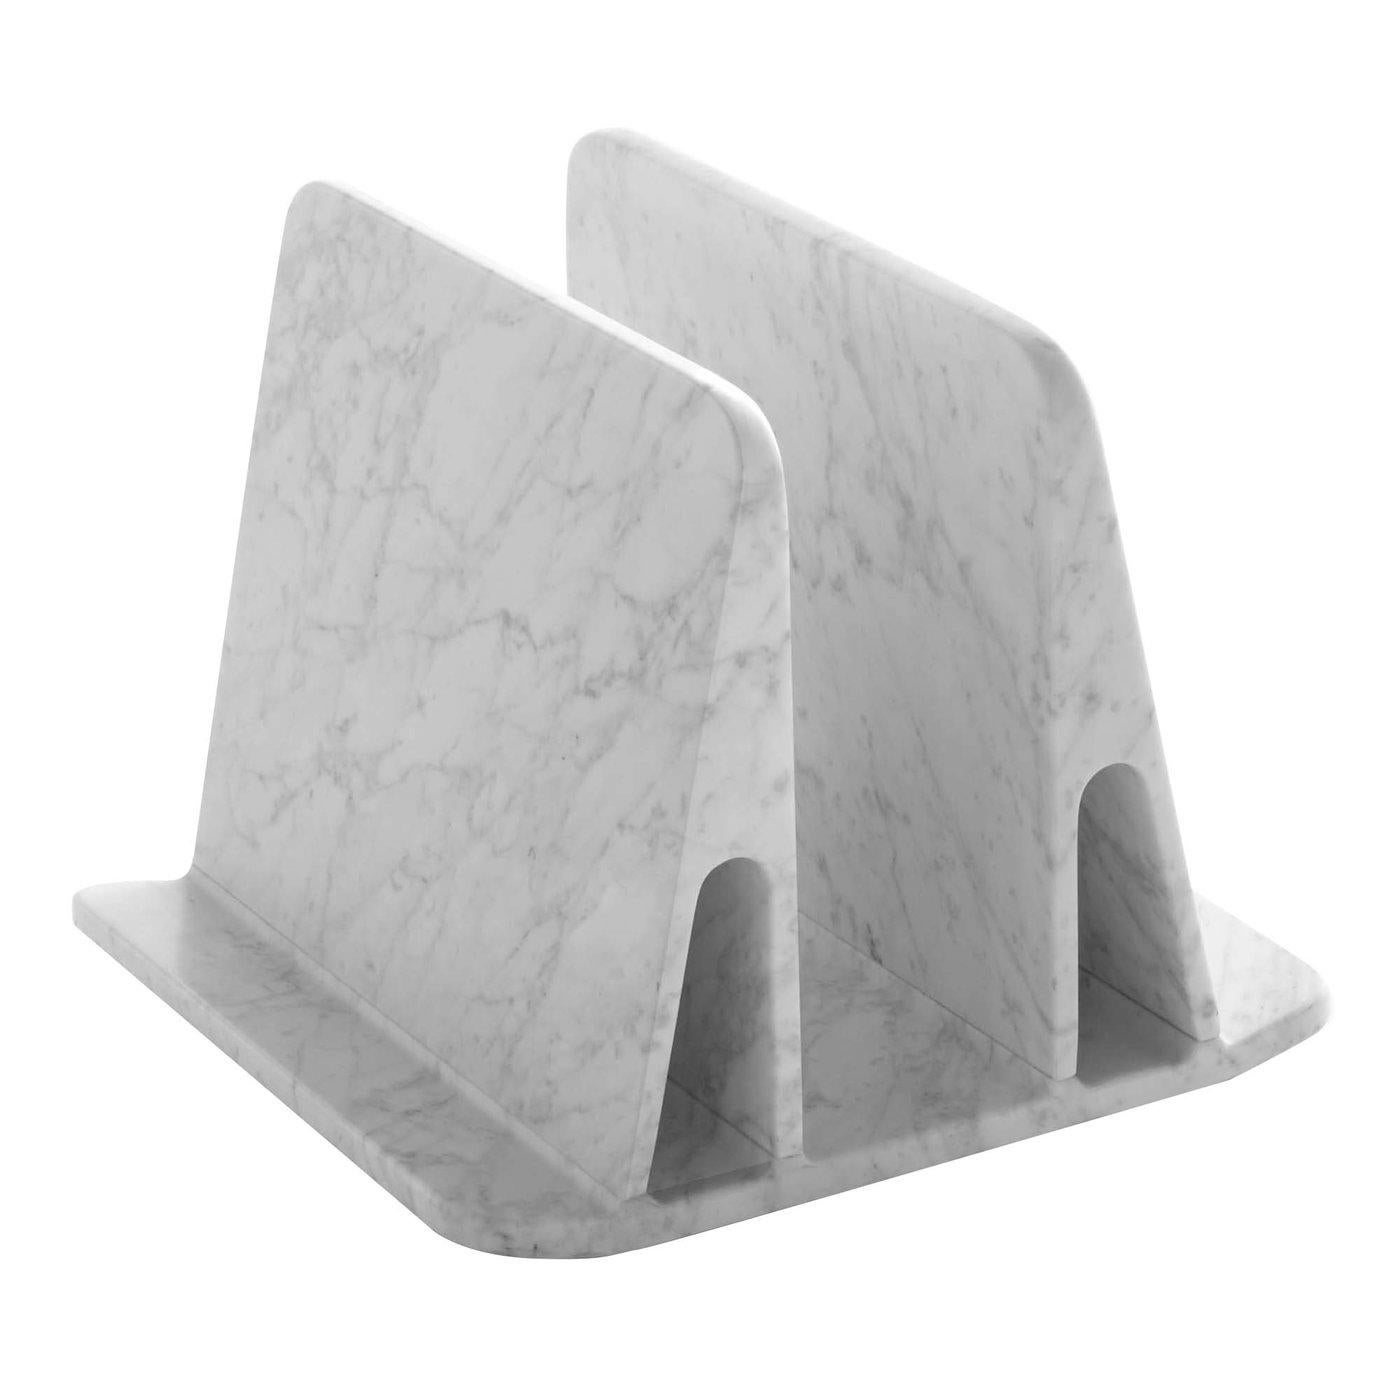 Magazine holder, rotating, in white Carrara marble, matt polished finish.